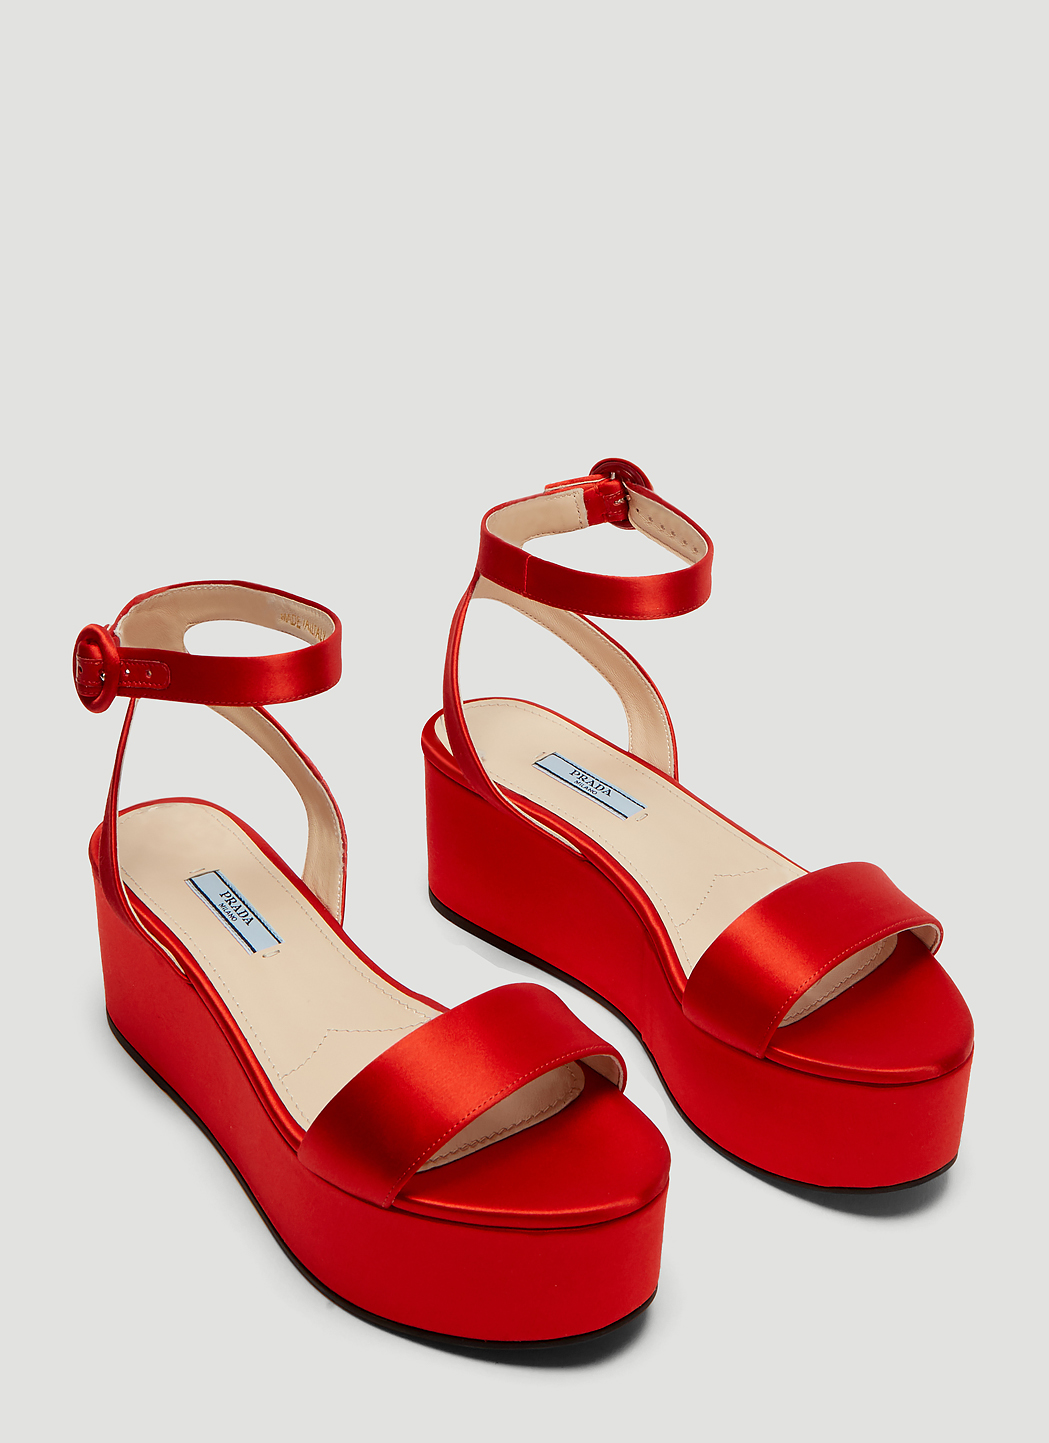 Prada Satin Flatform Sandals in Red | LN-CC